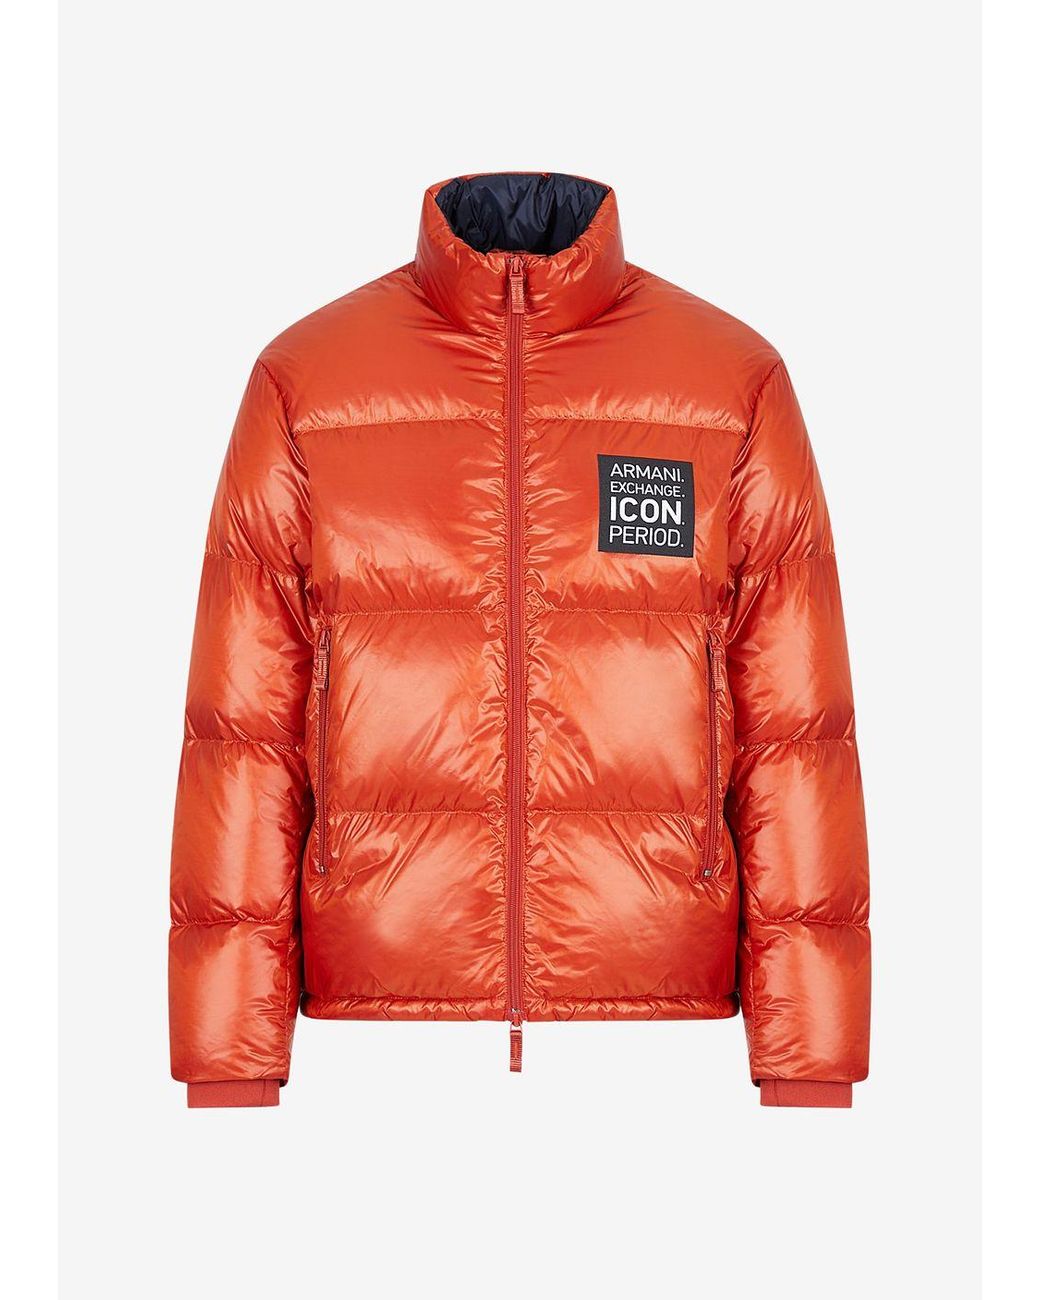 Armani Exchange Icon Logo Padded Jacket in Orange for Men | Lyst